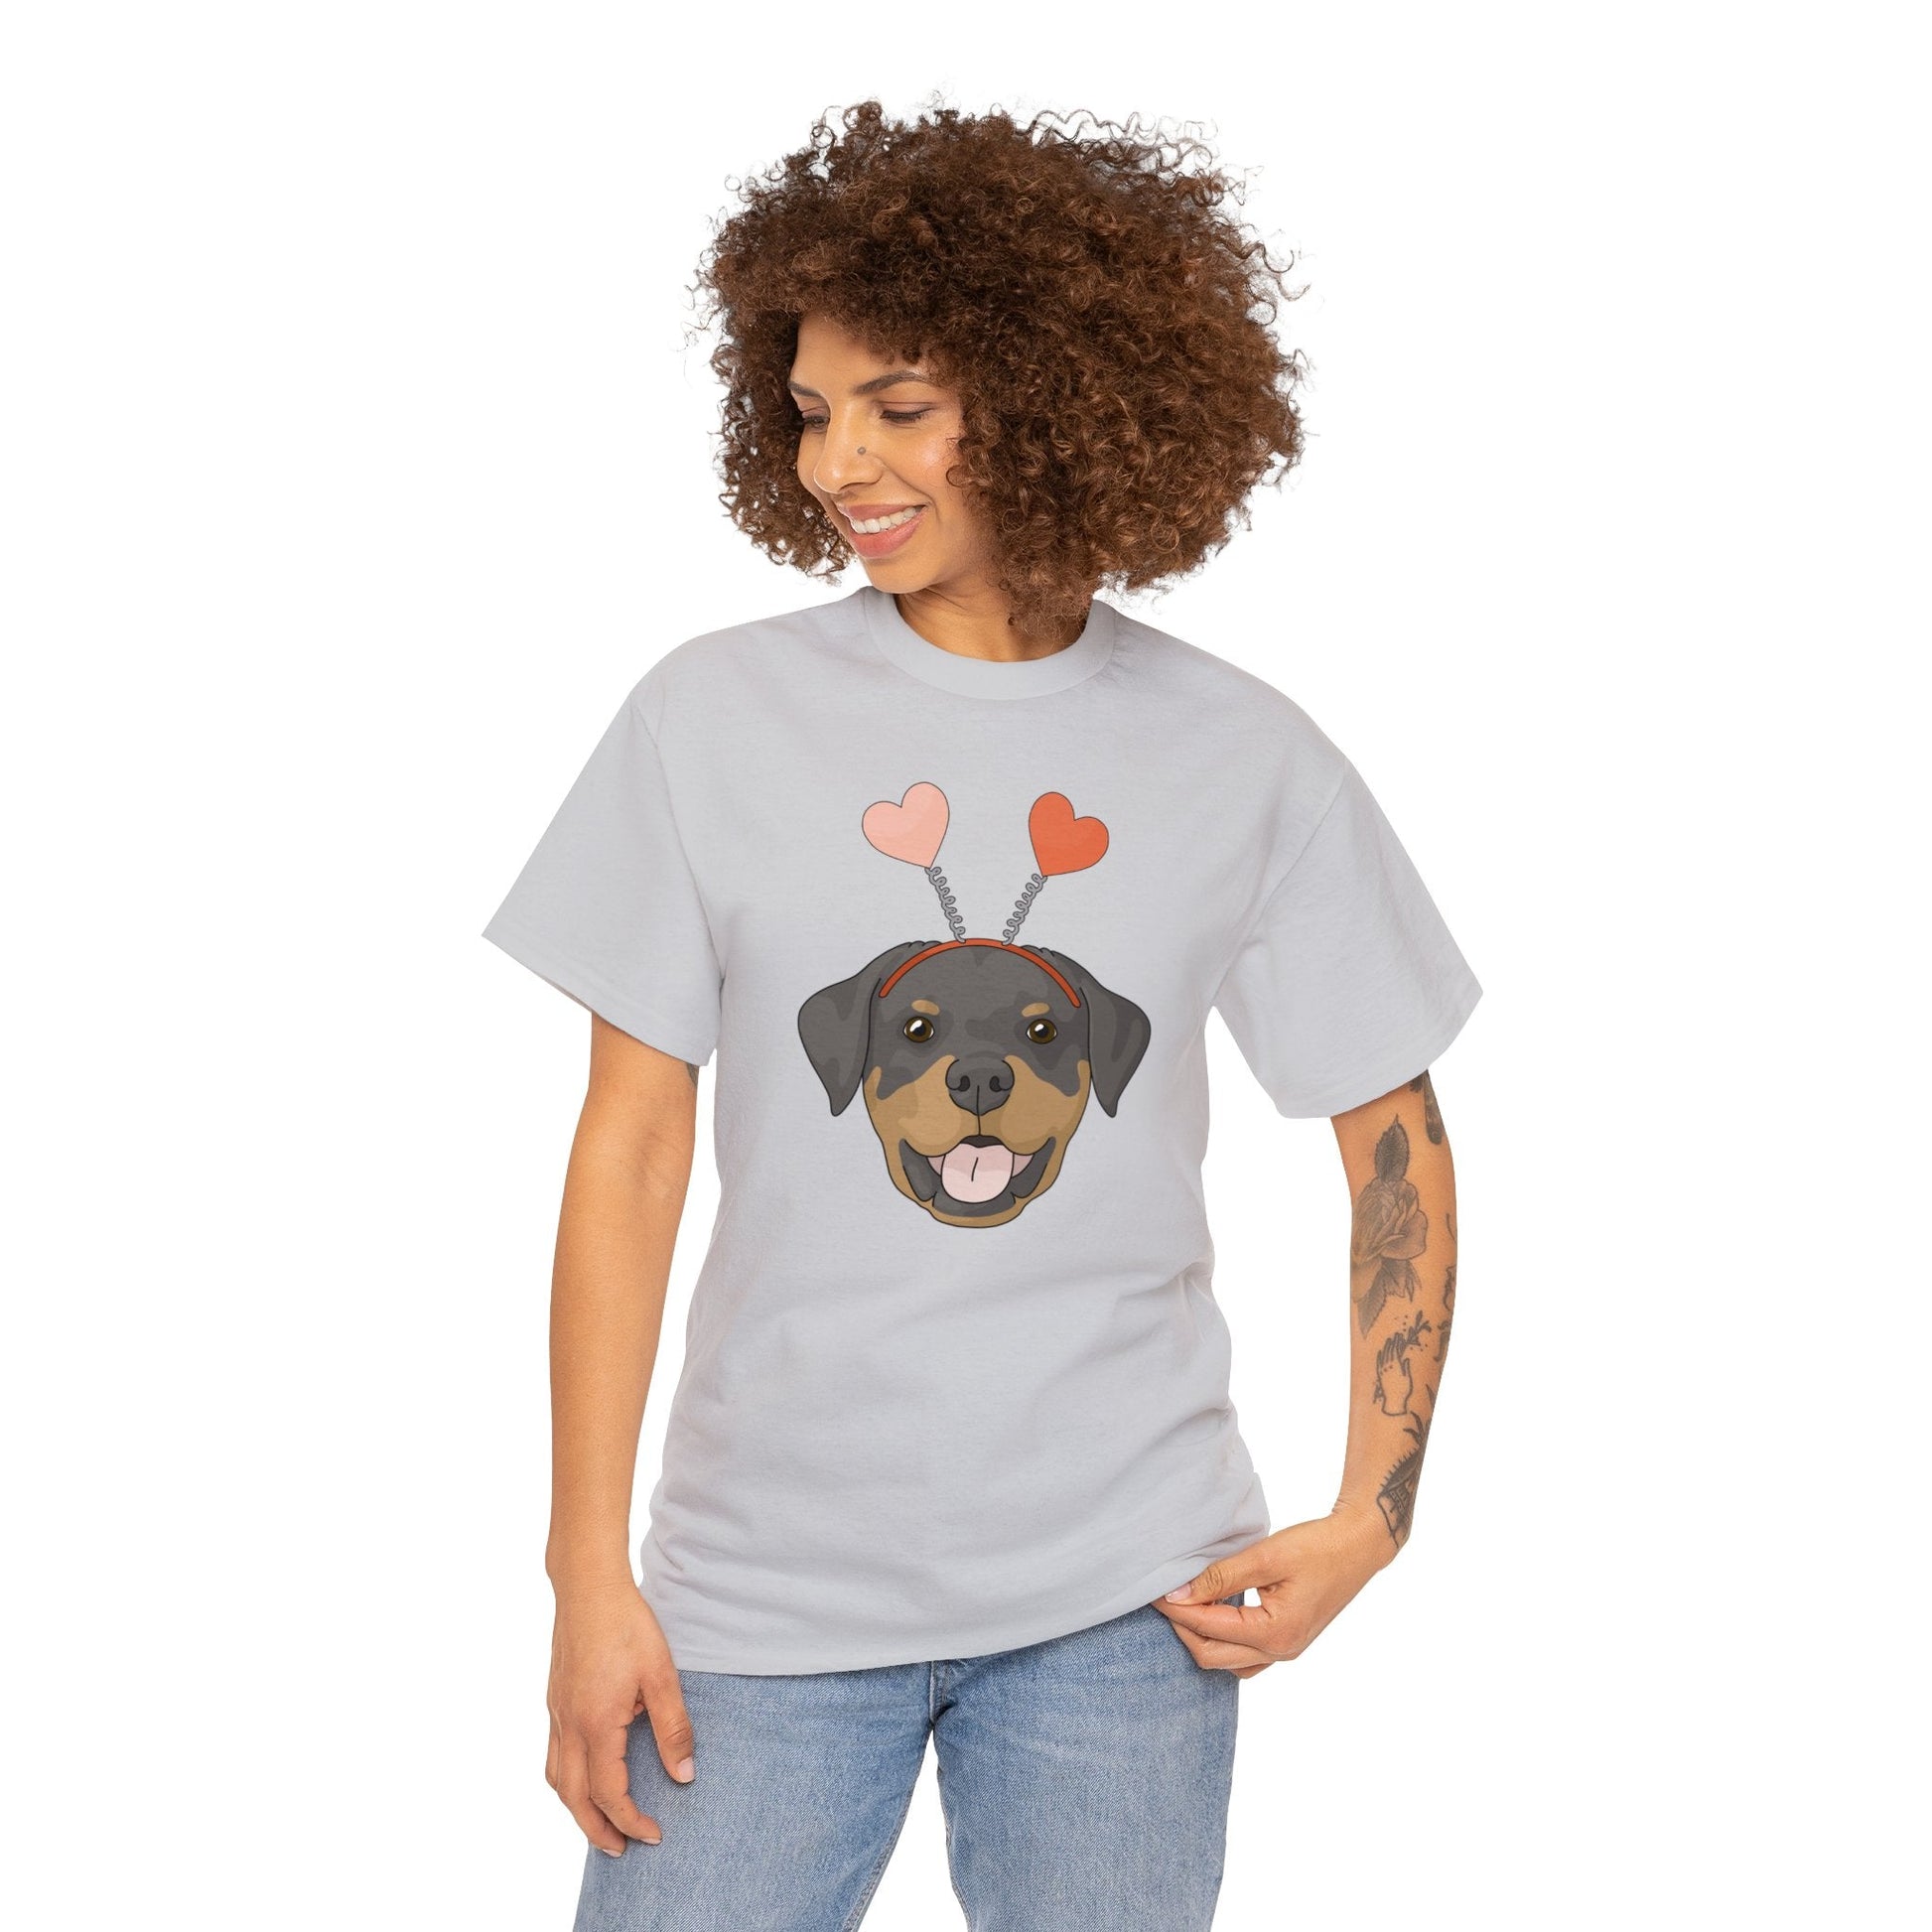 A Very Rottie Valentine | Unisex T-shirt - Detezi Designs-20081091608037869328